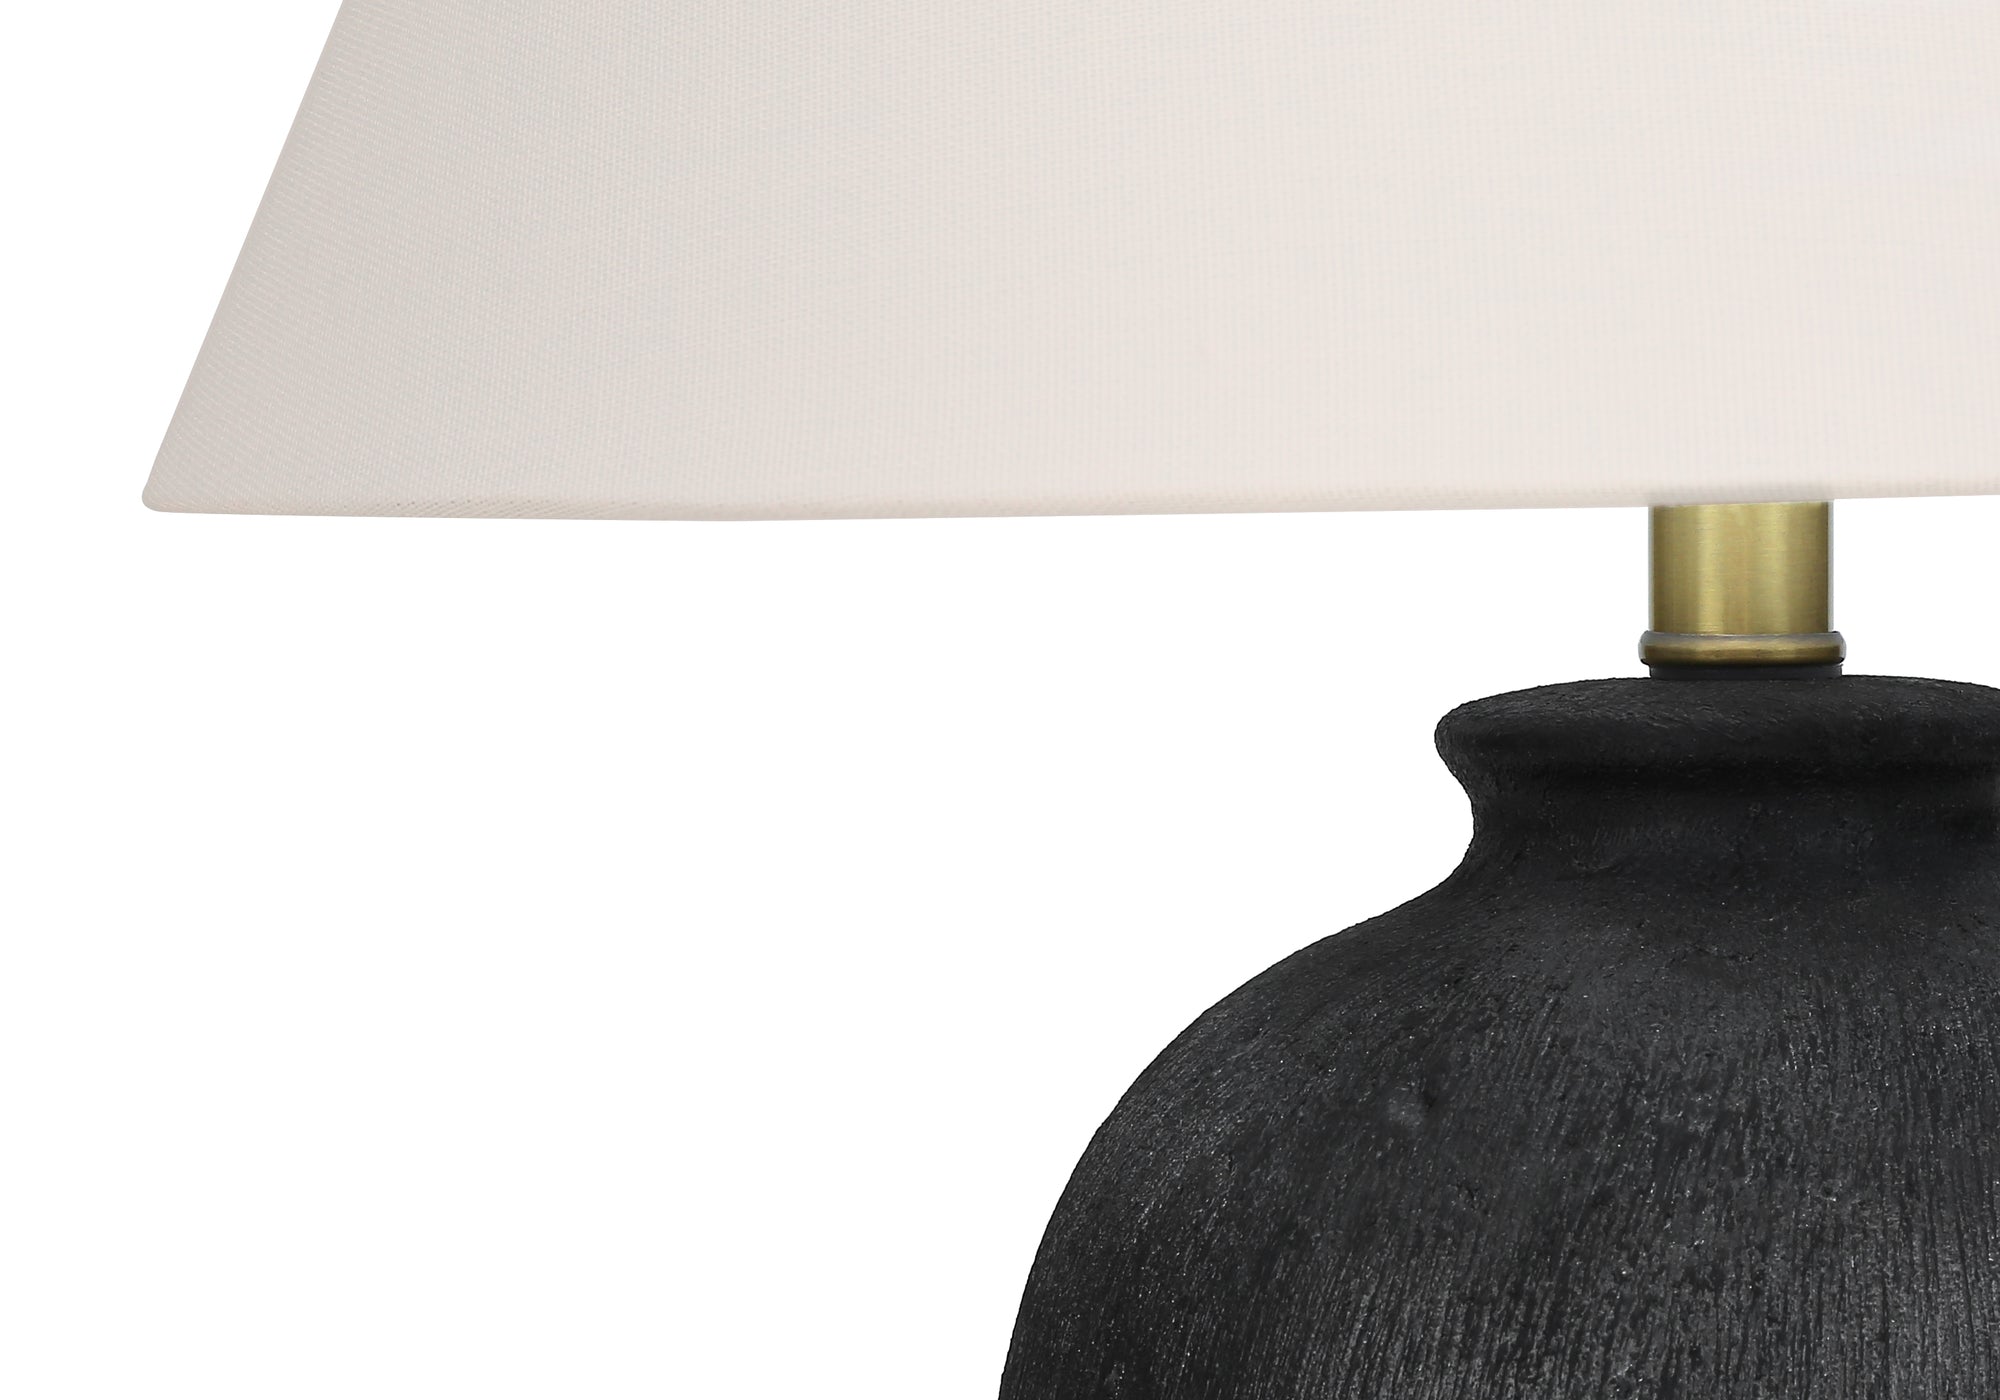 MN-559721    Lighting, 24"H, Table Lamp, Black Ceramic, Ivory / Cream Shade, Modern